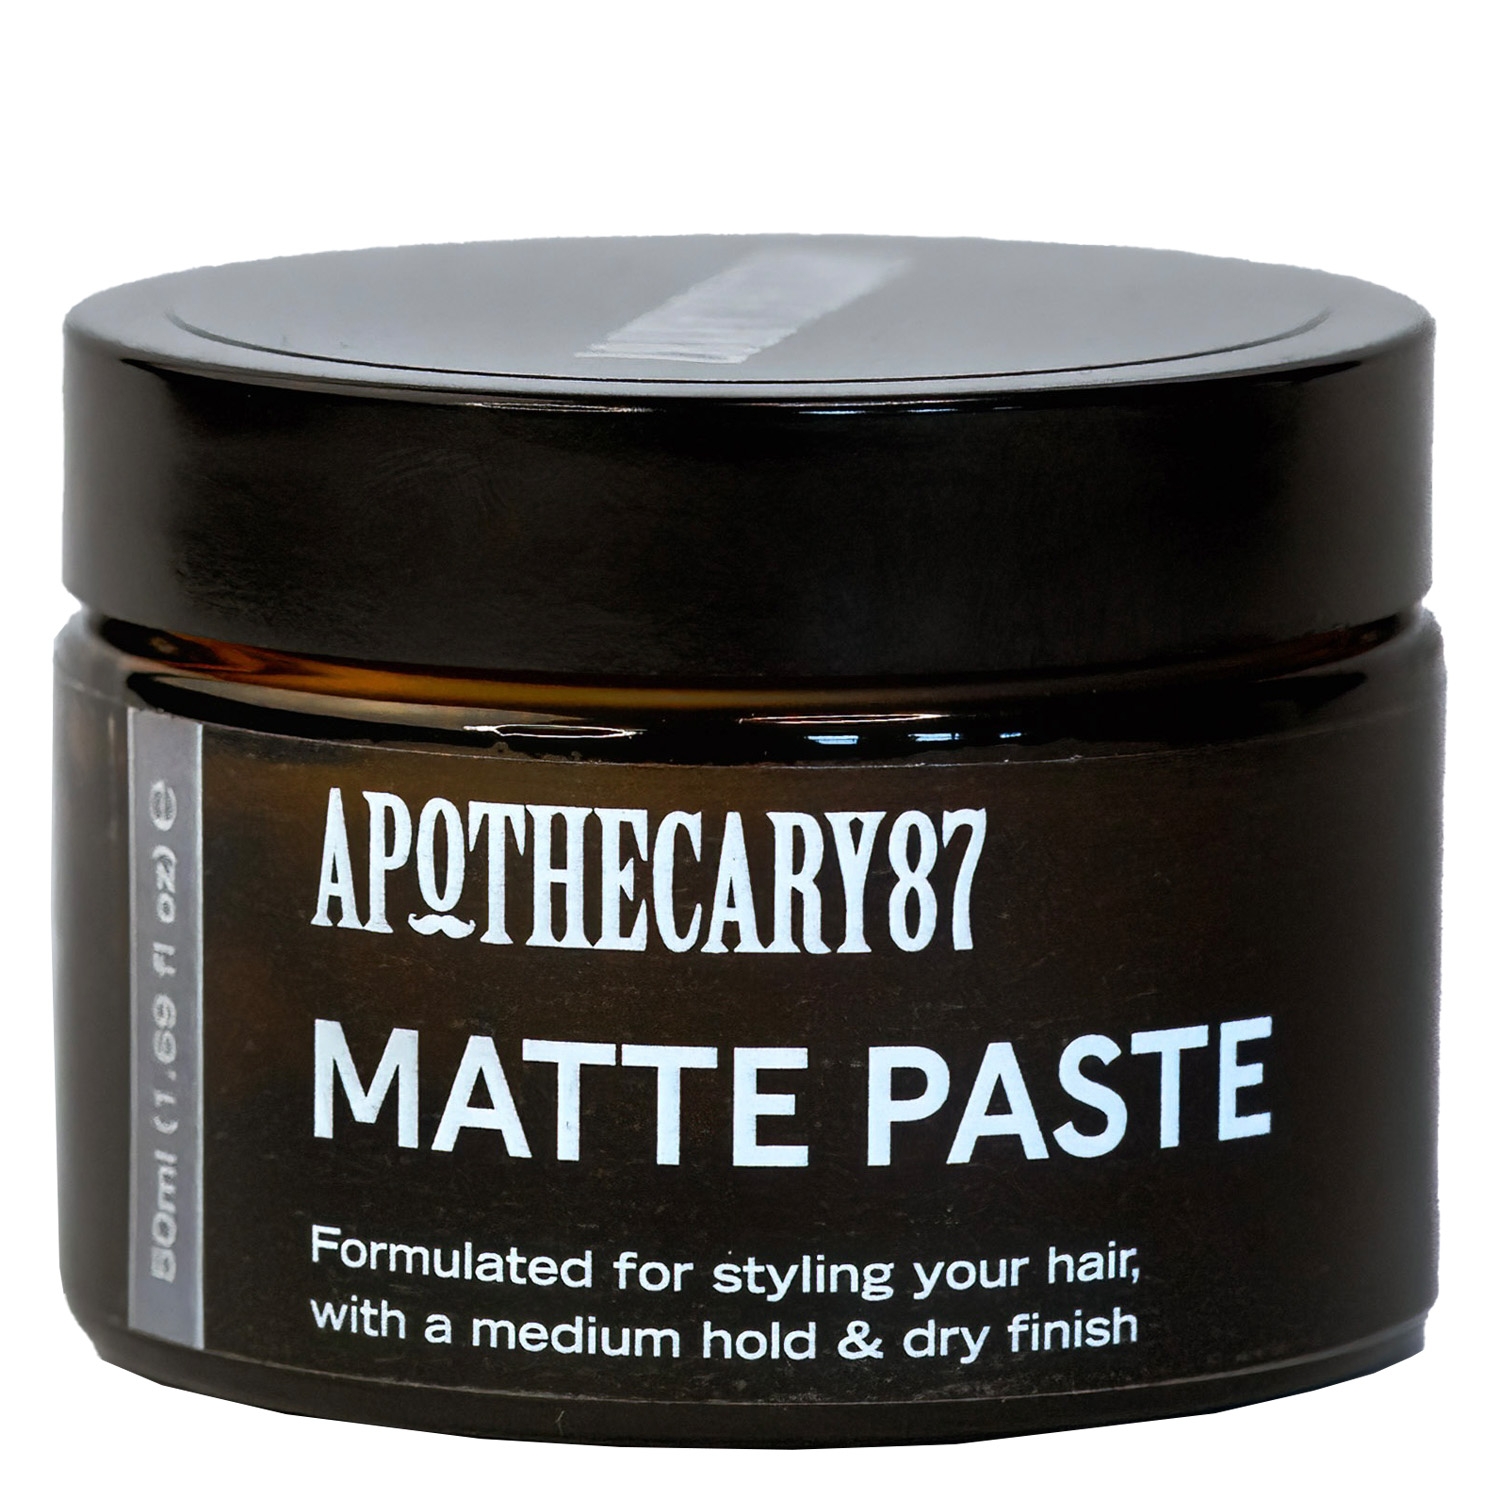 Produktbild von Apothecary87 Grooming - Matte Paste